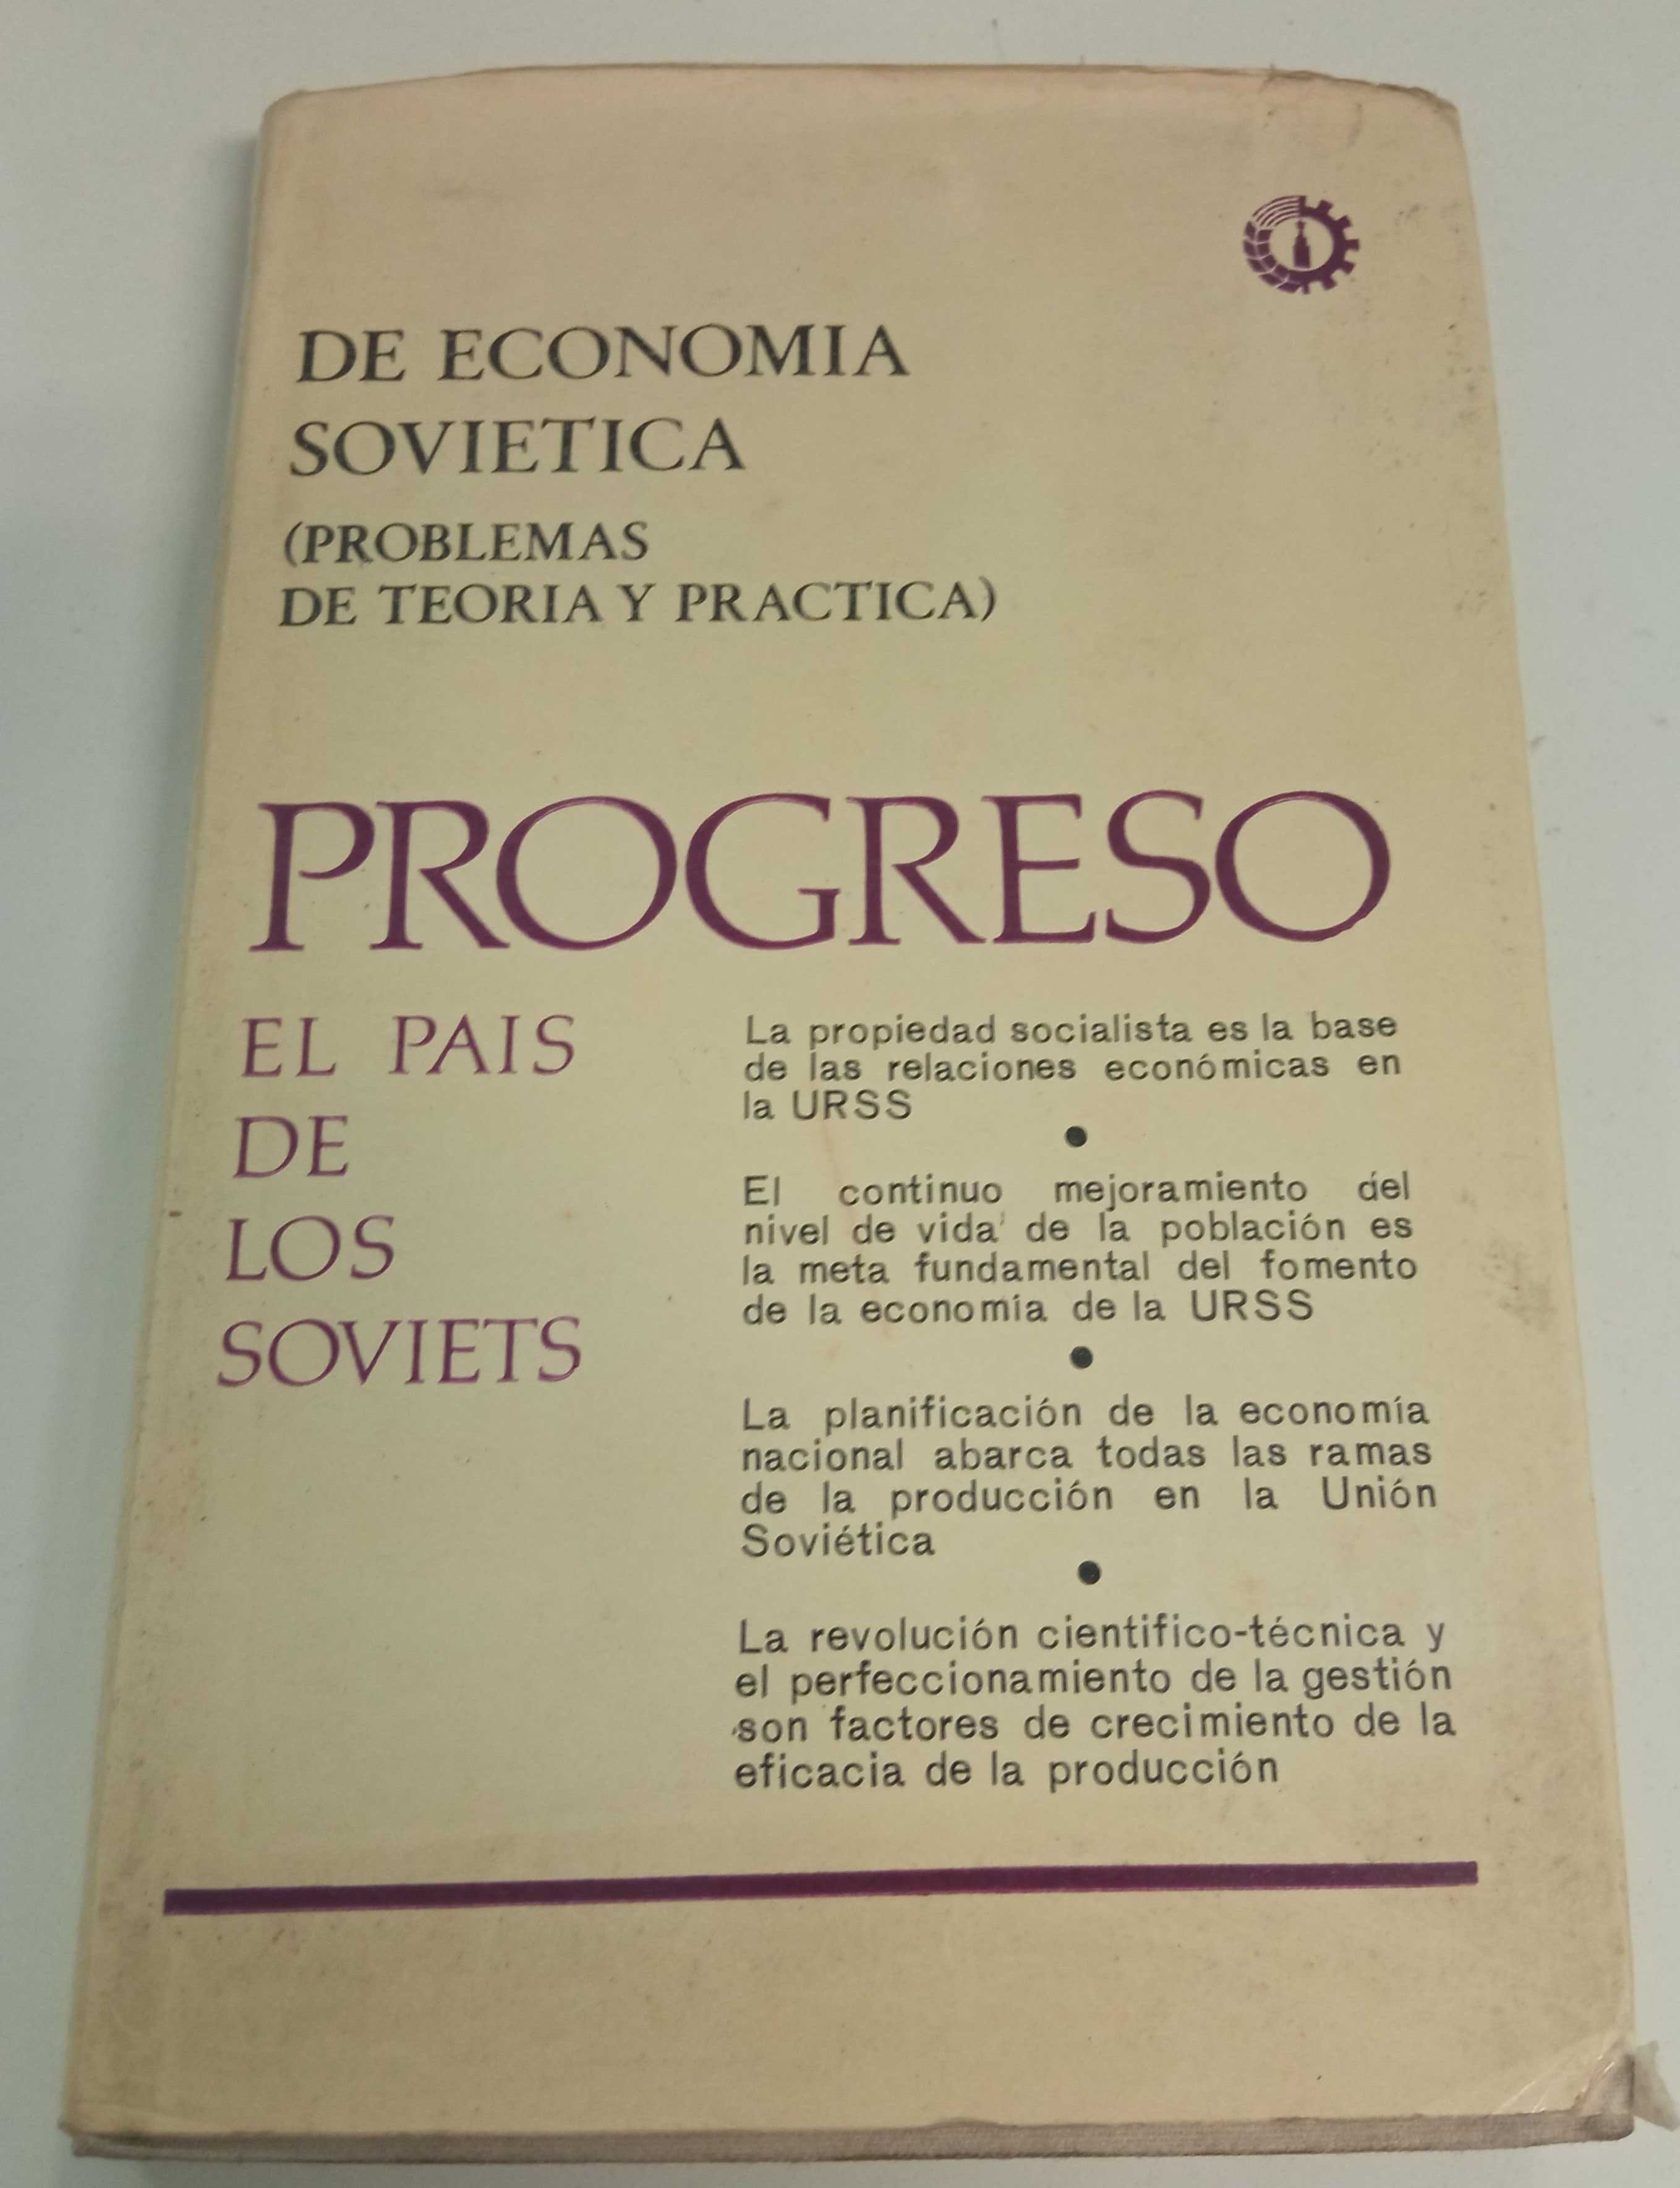 De economia sovietica